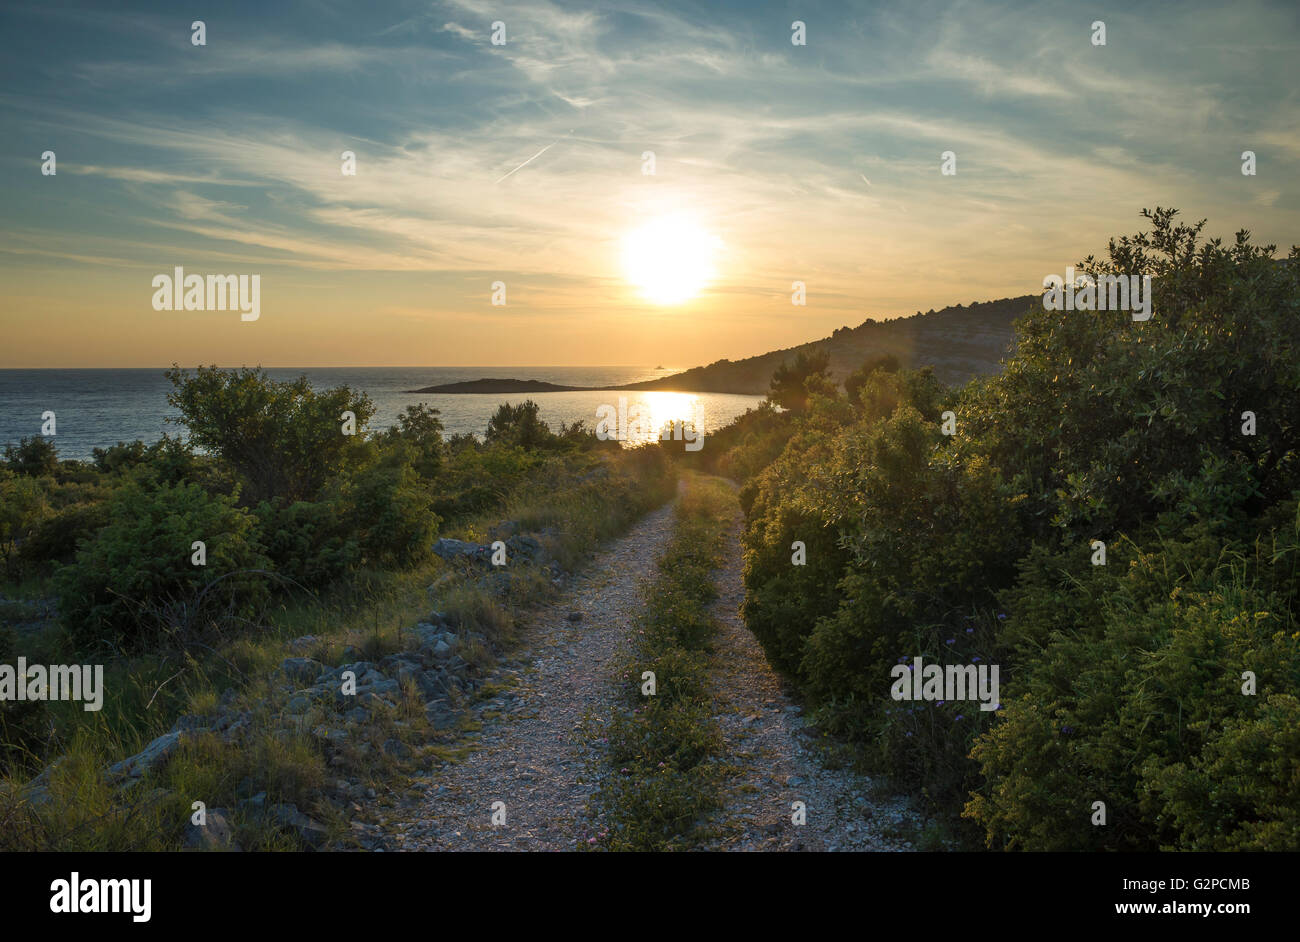 Razanj Croatia Europe. Landscape and nature photo. Adriatic Sea and a road. Calm warm summer evening with beautiful colors and tones. Sunset photo. Stock Photo